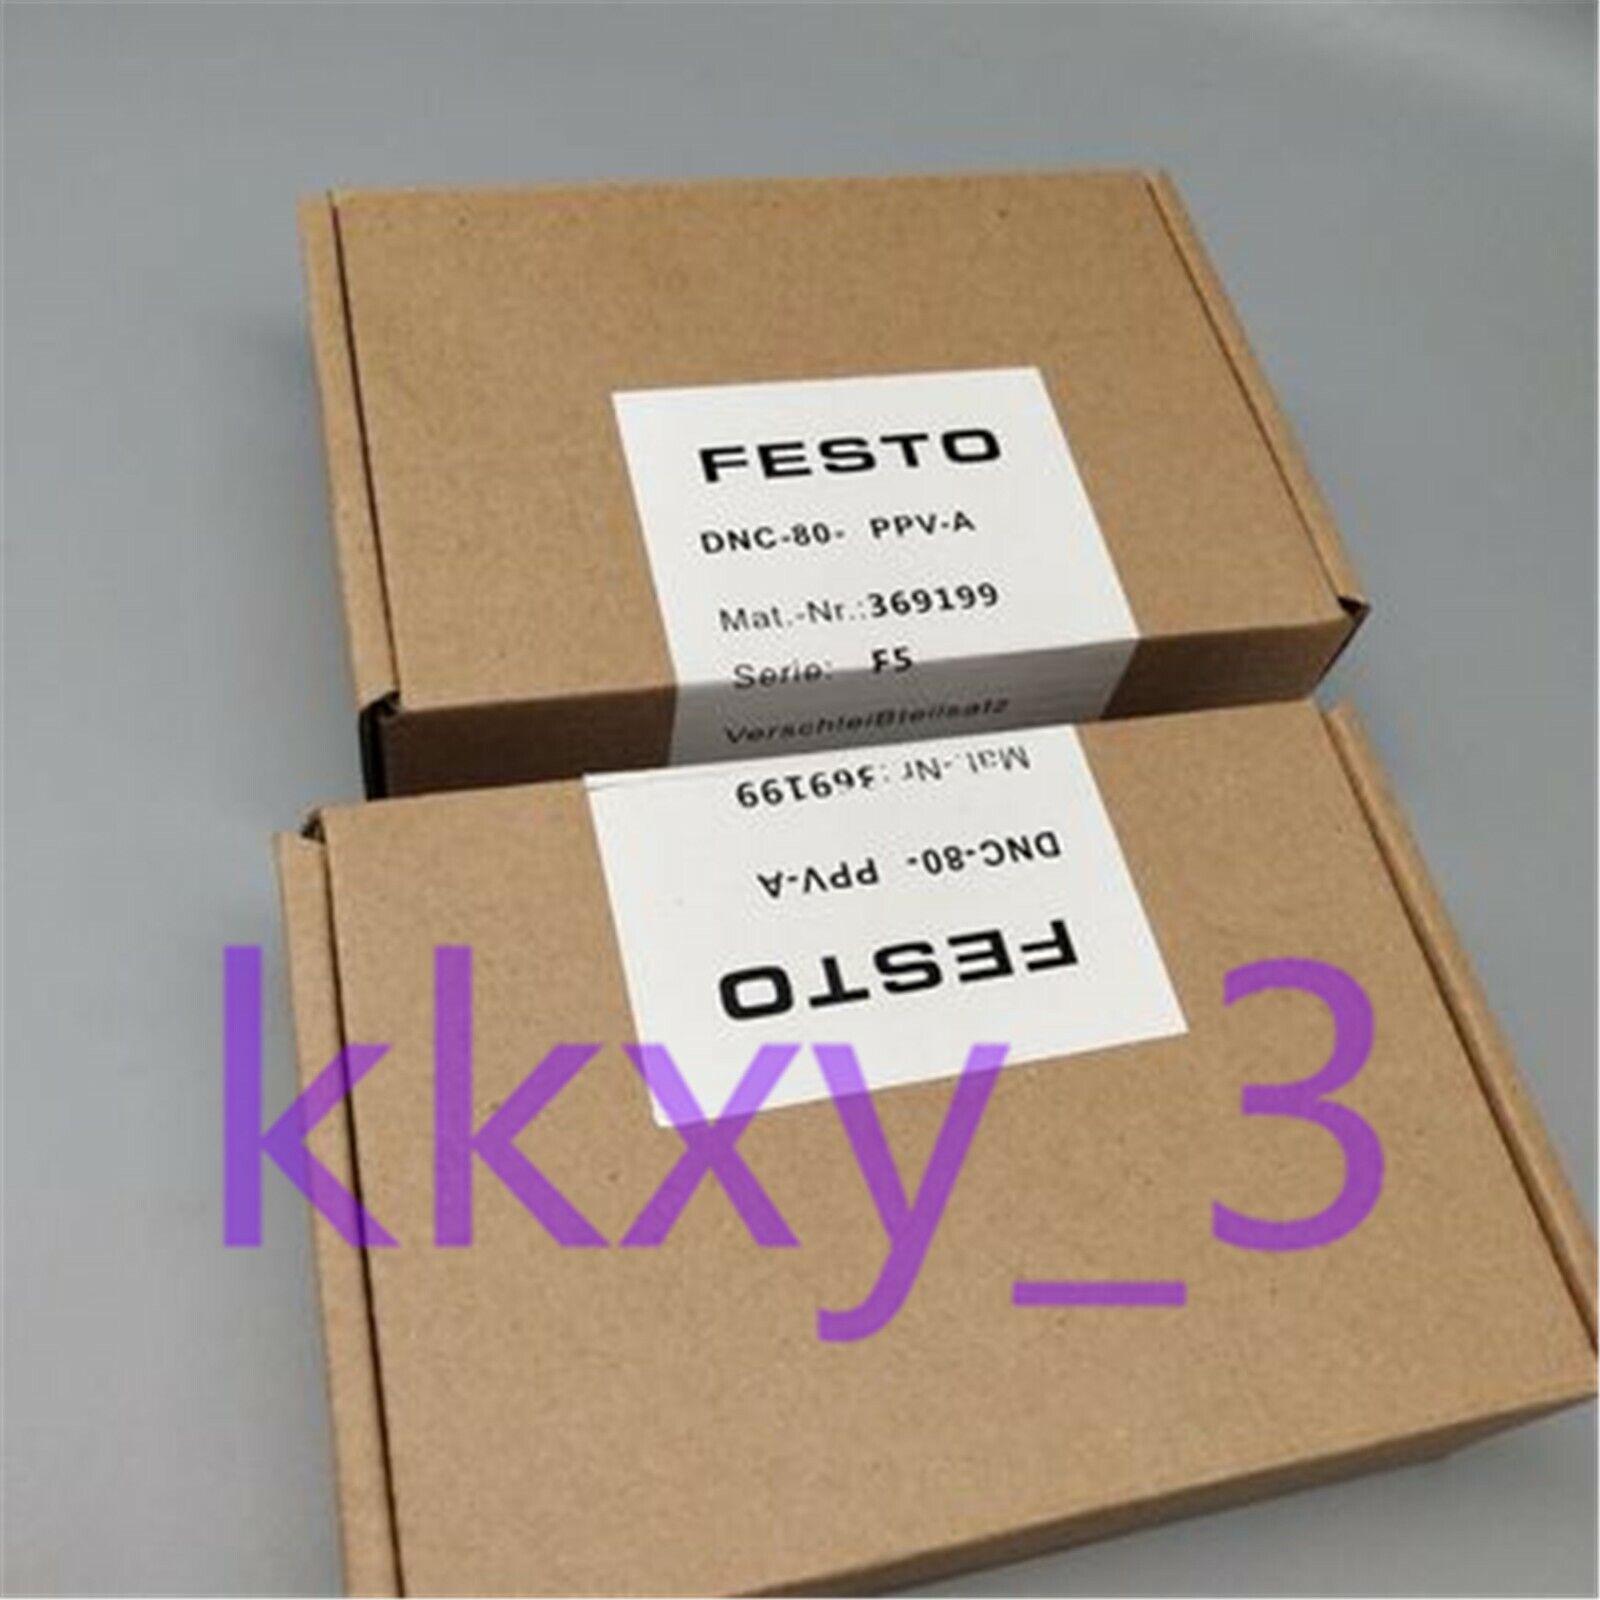 1 PCS NEW IN BOX FESTO cylinder repair kit DNC--80-PPV-A 369199